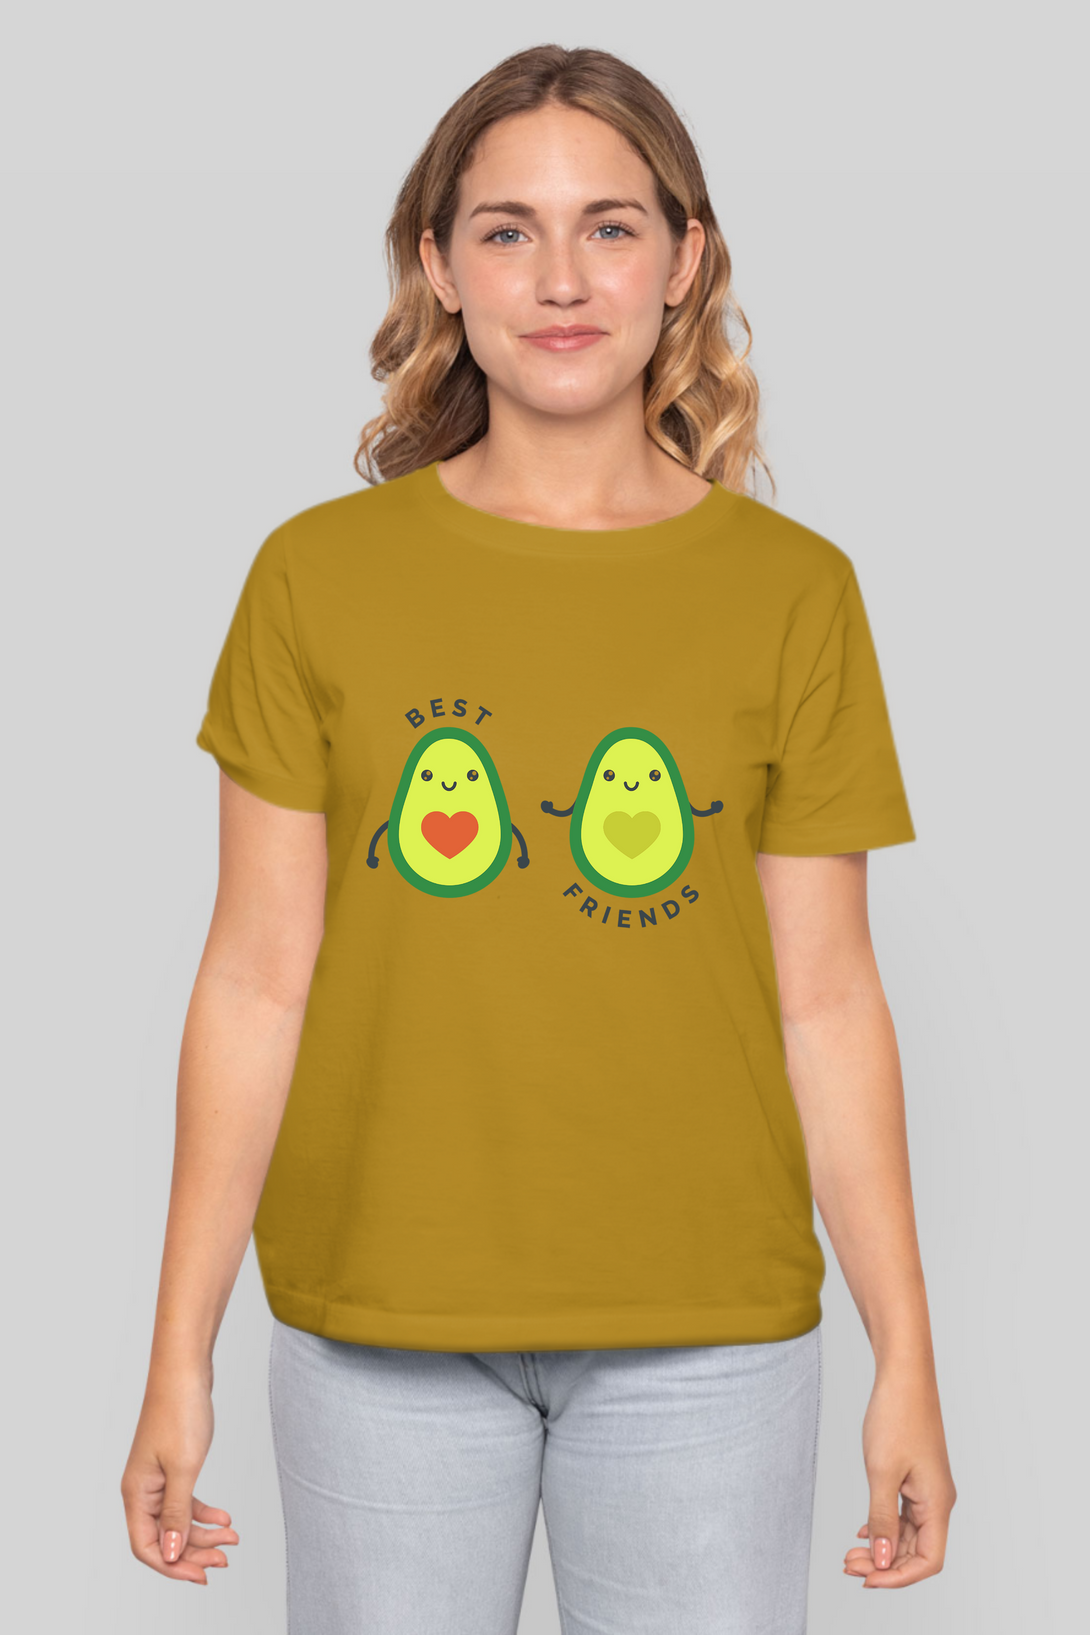 Avocado Friends Printed T-Shirt For Women - WowWaves - 9